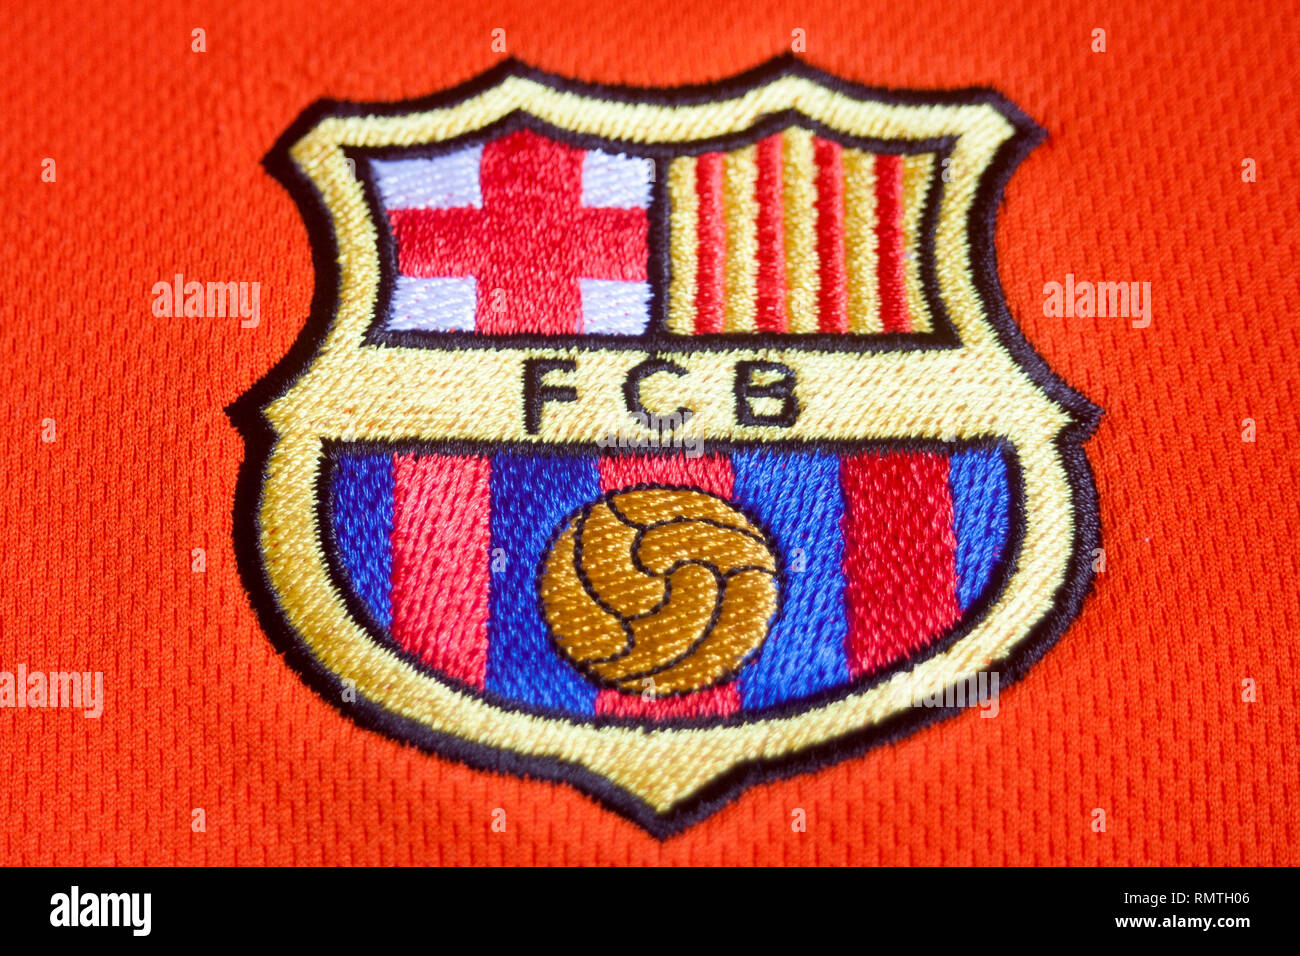 Football Club Barcelona shield on orange shirt Stock Photo